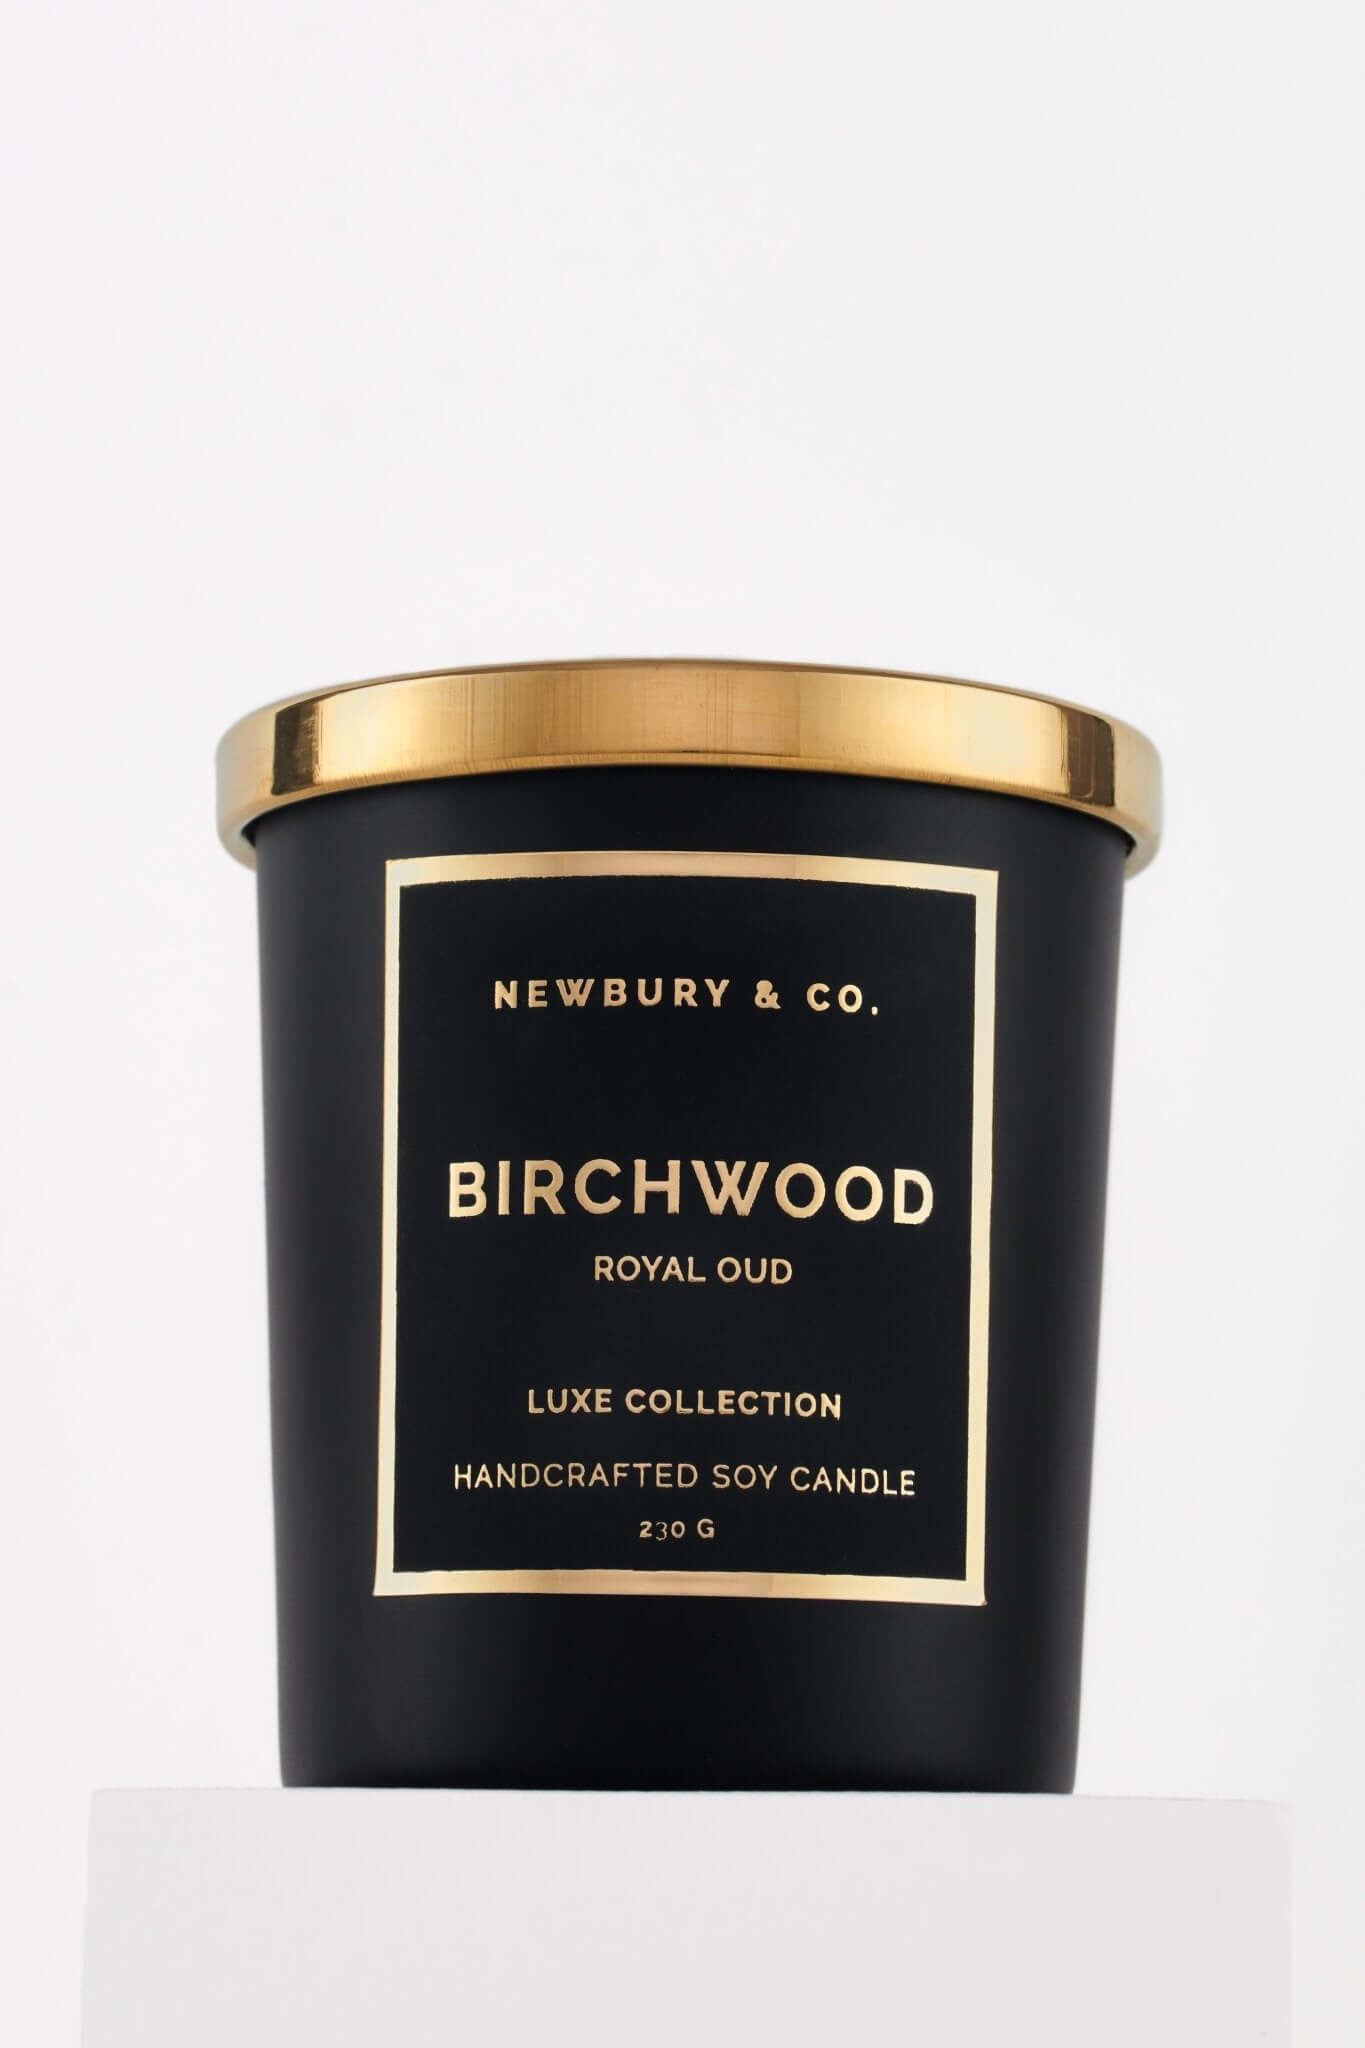 BIRCHWOOD | Royal Oud - Newbury & Co.